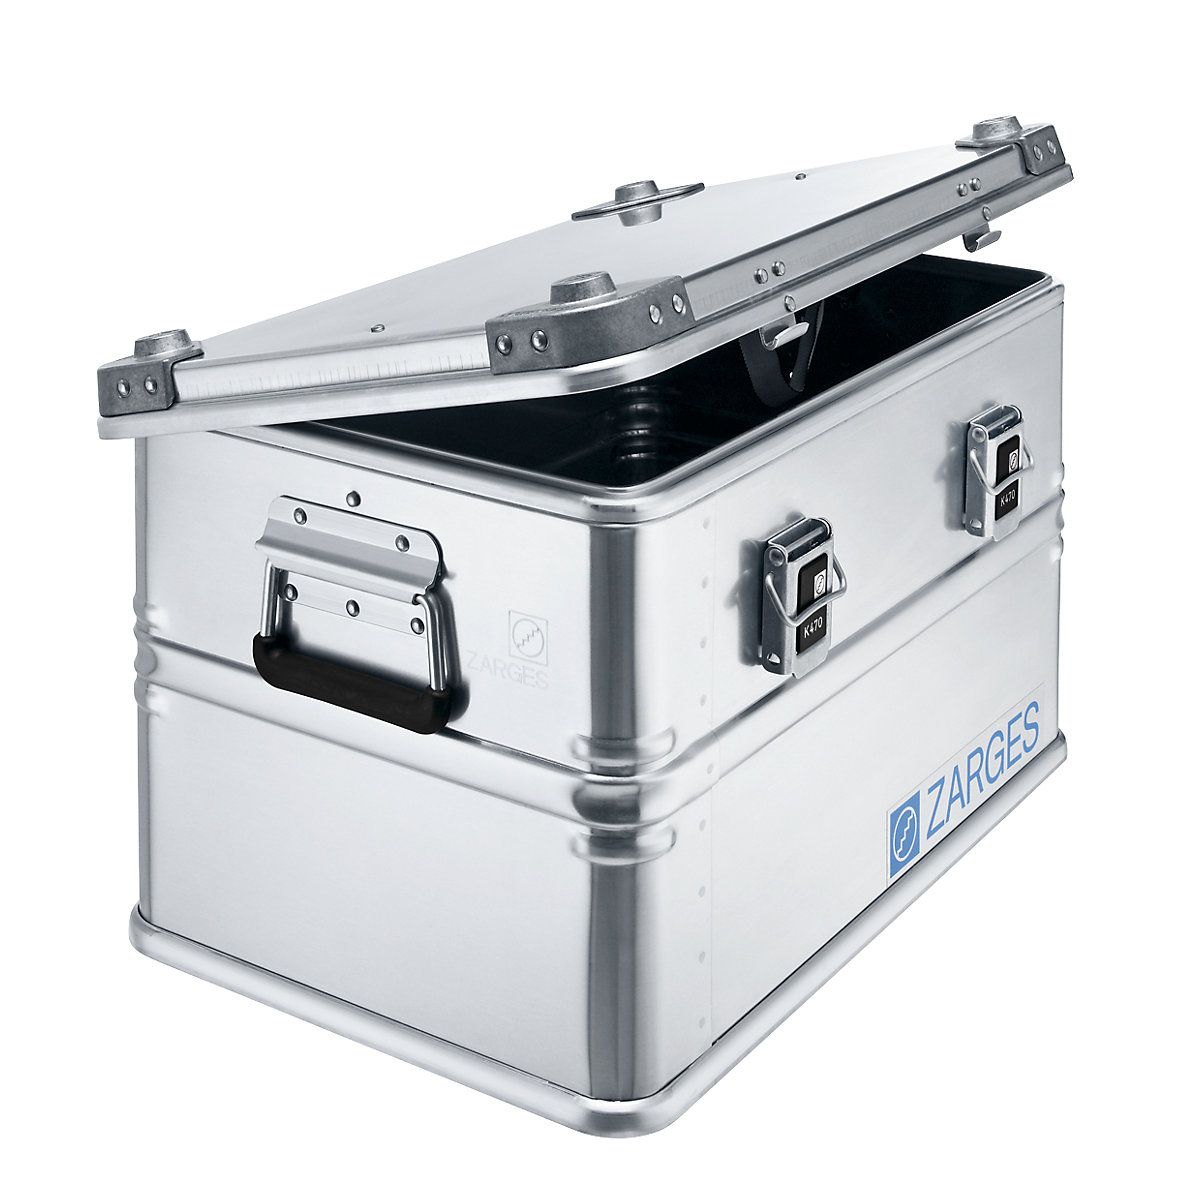 Caja de transporte de aluminio – ZARGES (Imagen del producto 2)-1